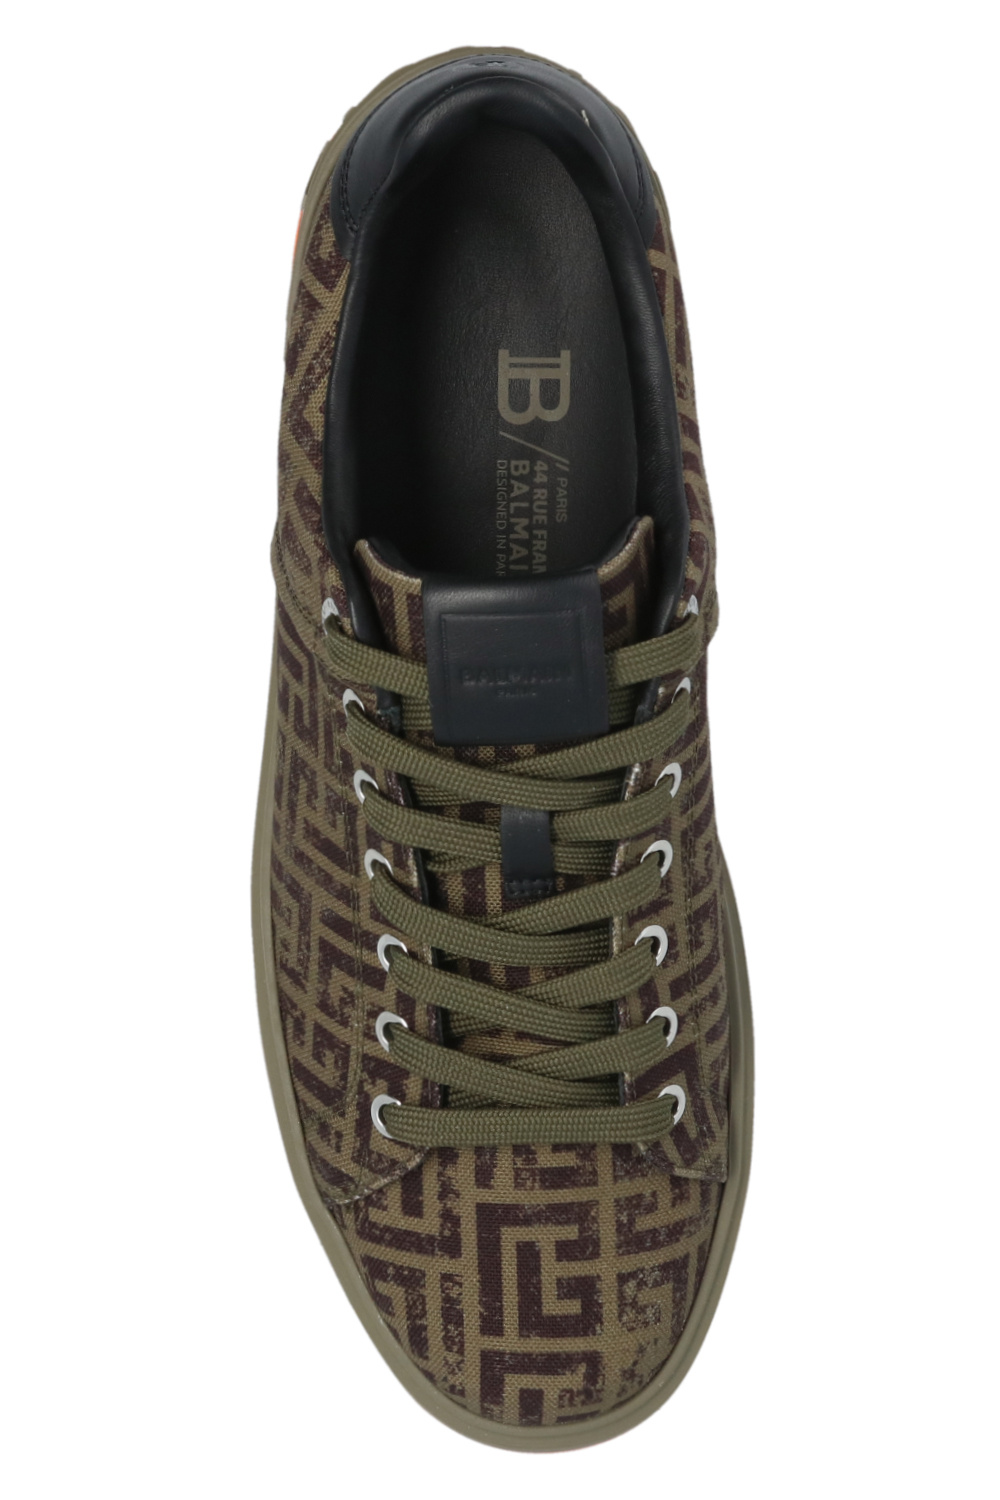 Balmain ‘B-Court’ sneakers